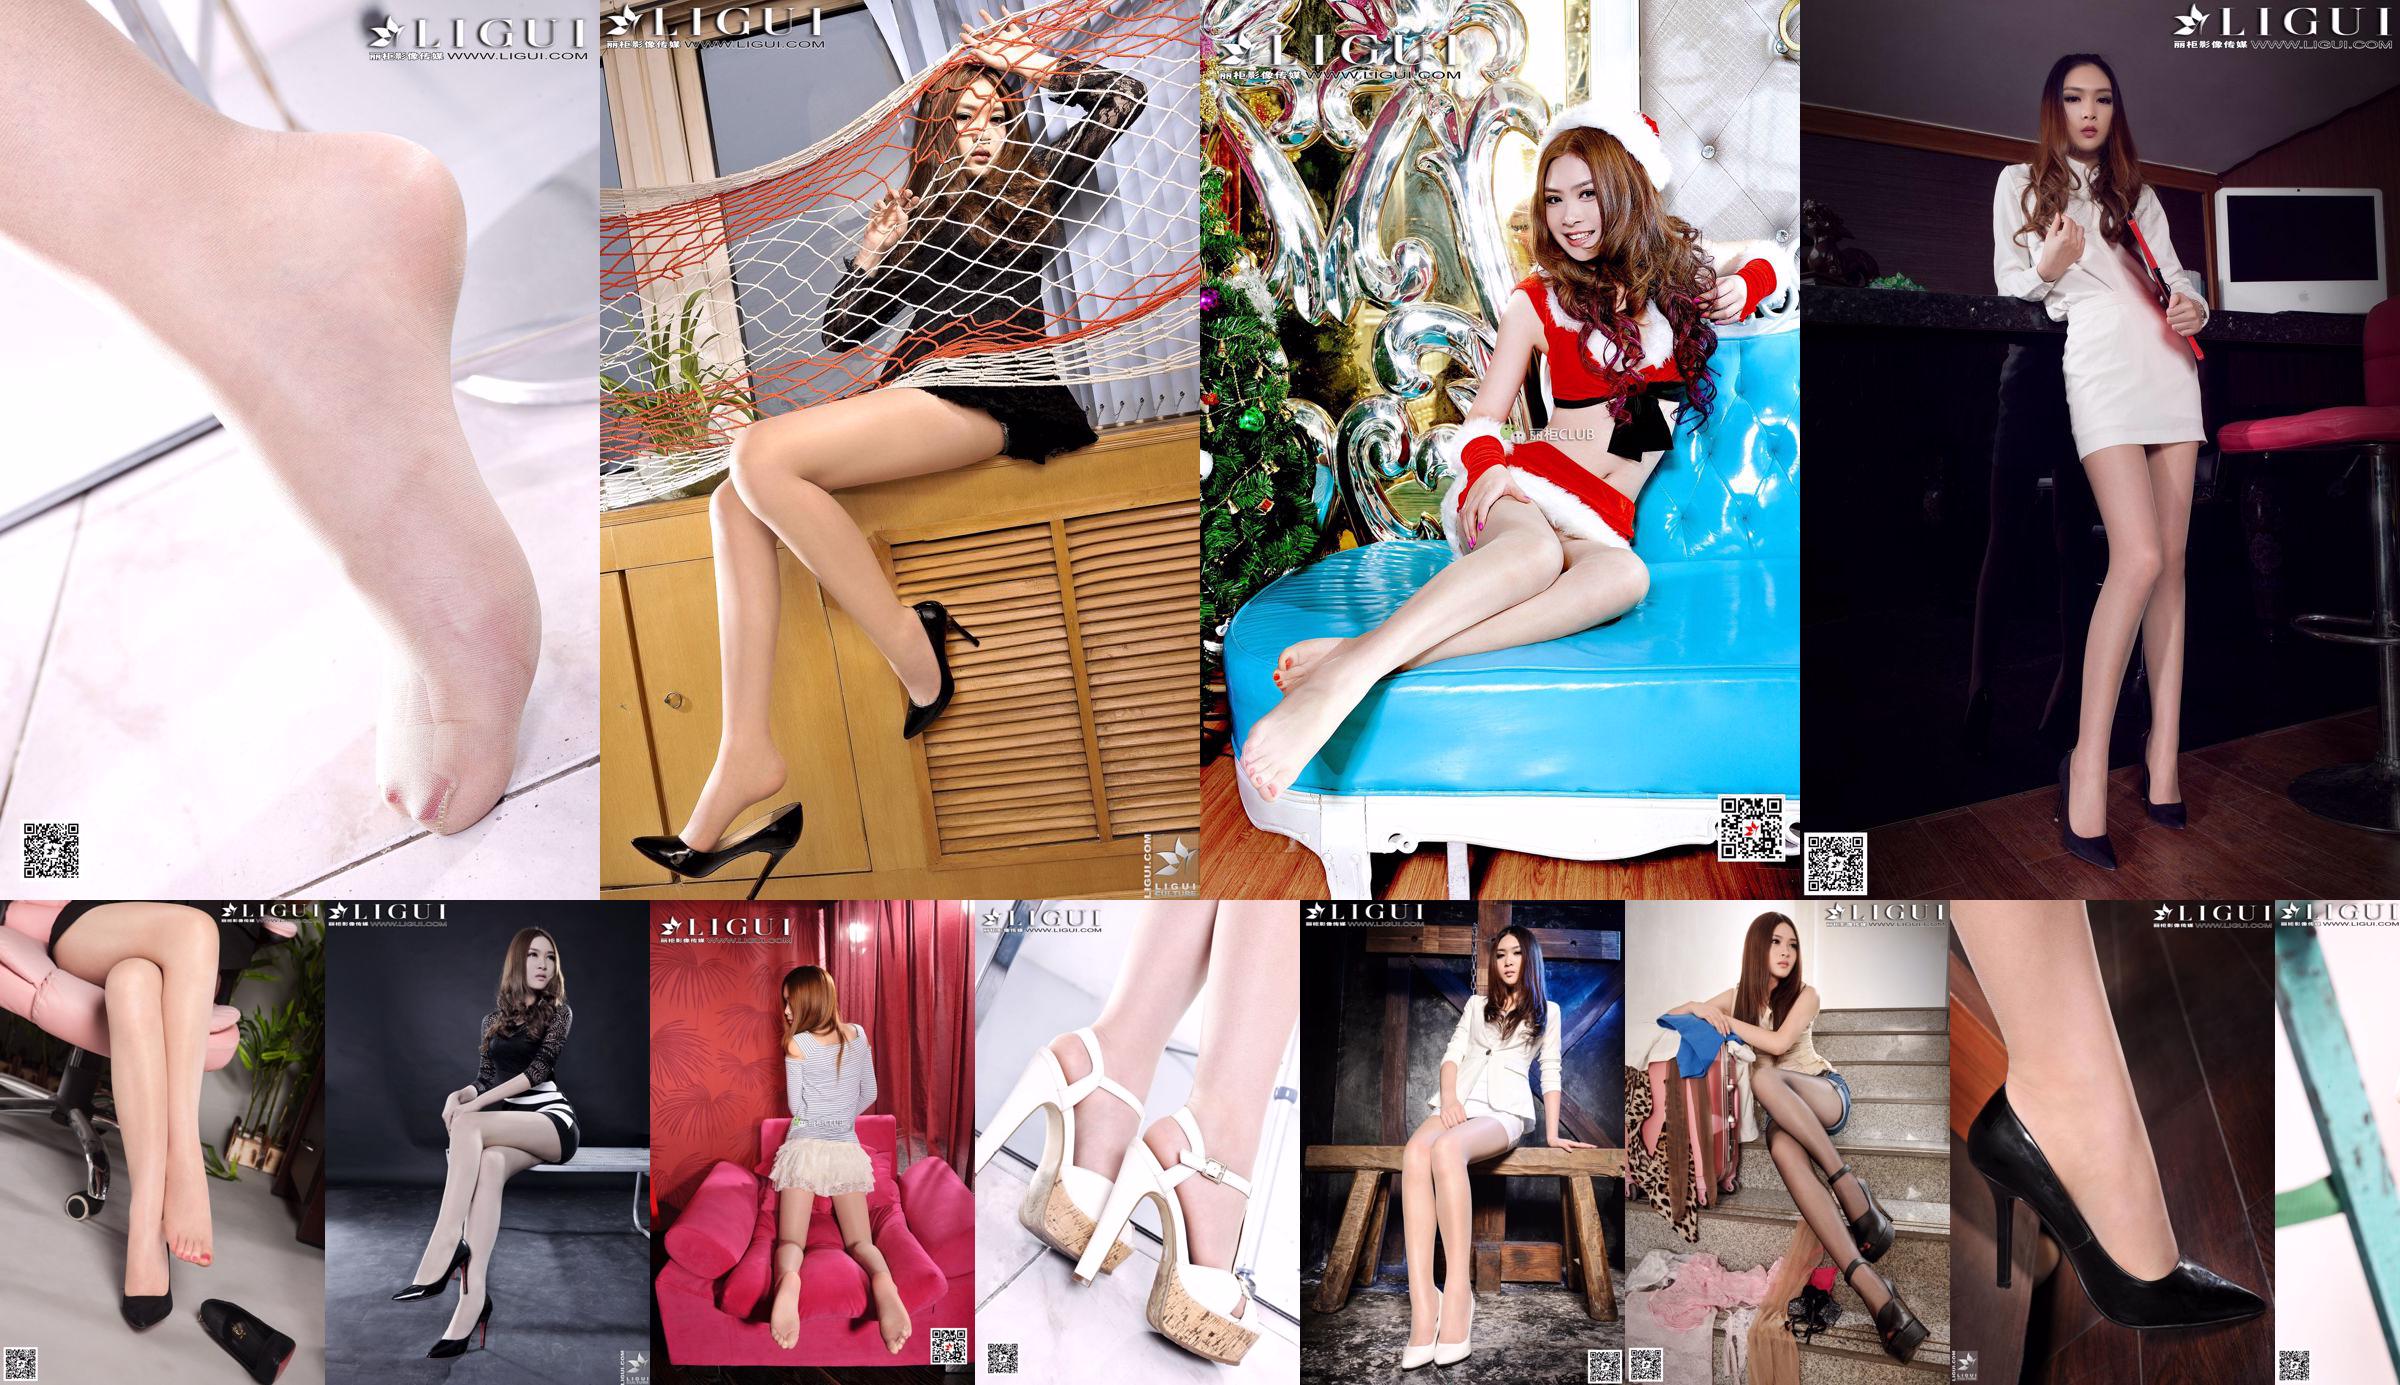 [丽 柜 LiGui] Model Yoona "Stopy na wysokich obcasach na sofie" Zdjęcie z pięknymi nogami i nefrytowymi stopami No.f64e0b Strona 1